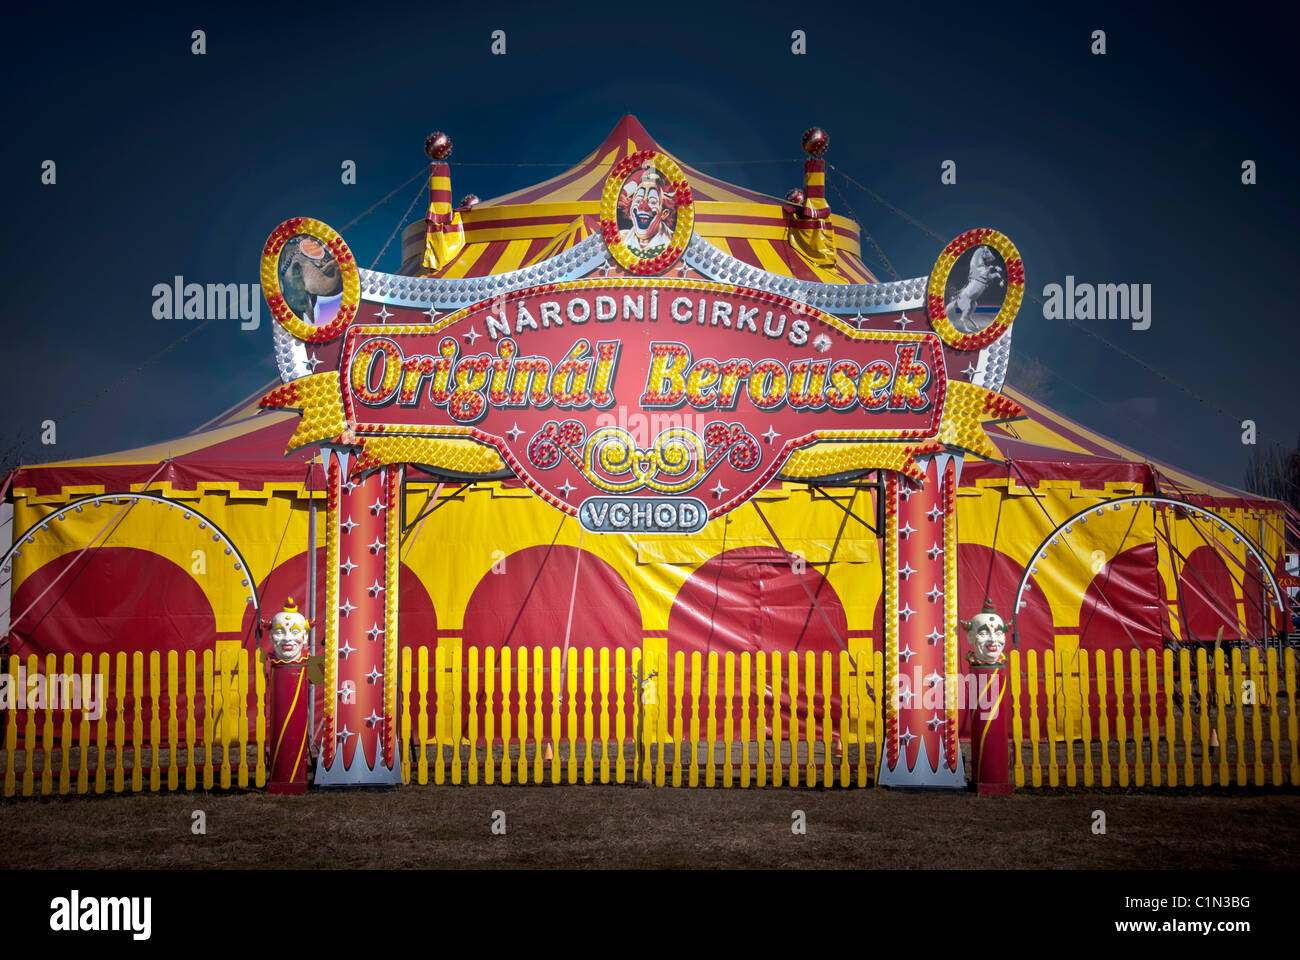 tent of traditional circus Berousek at dusk Stock Photo